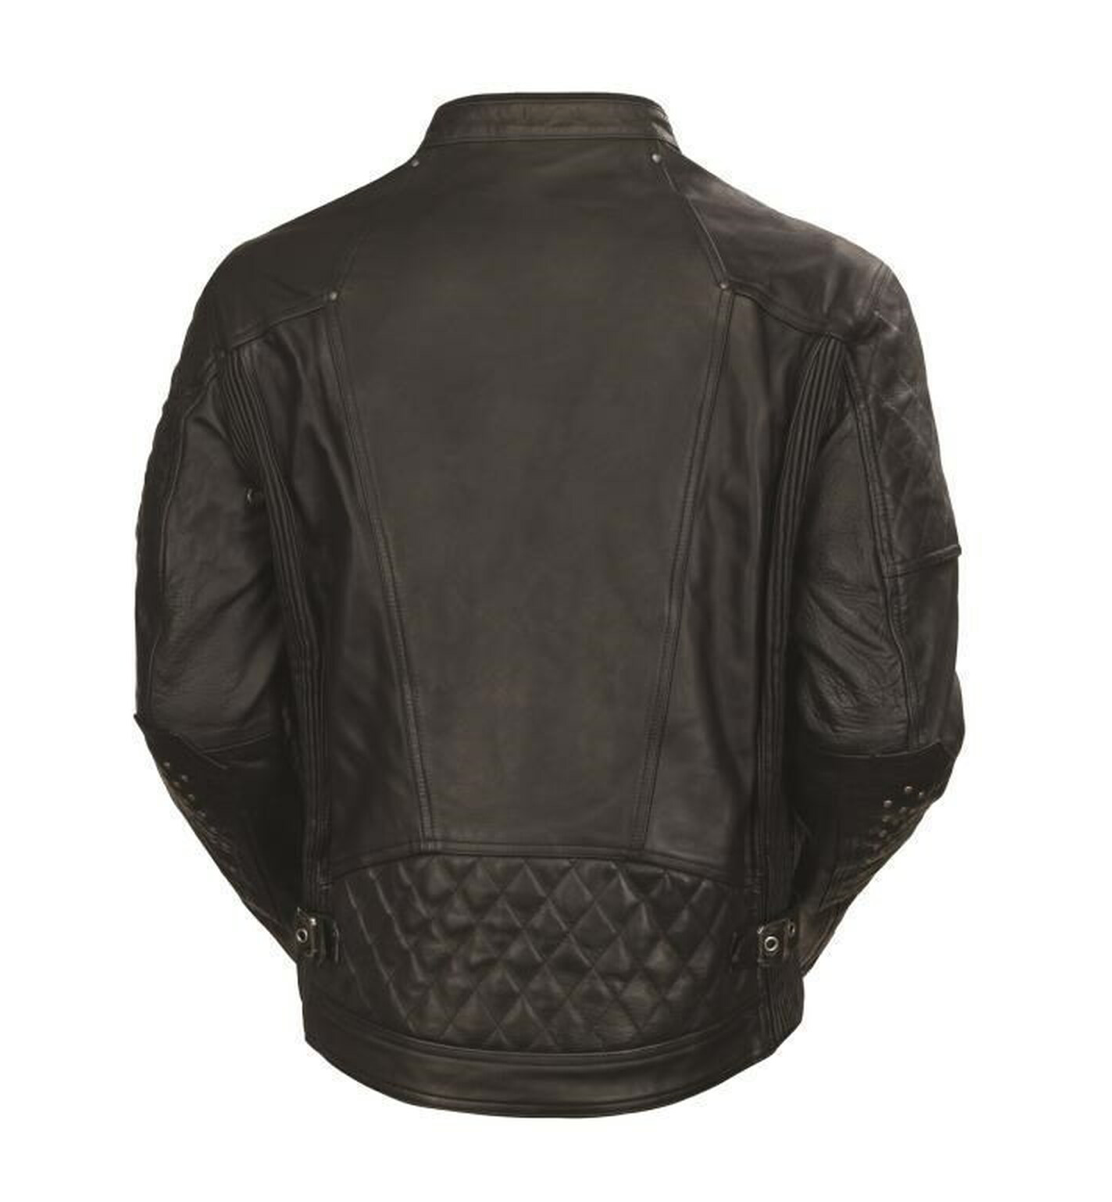 Clash CE Jacket Black